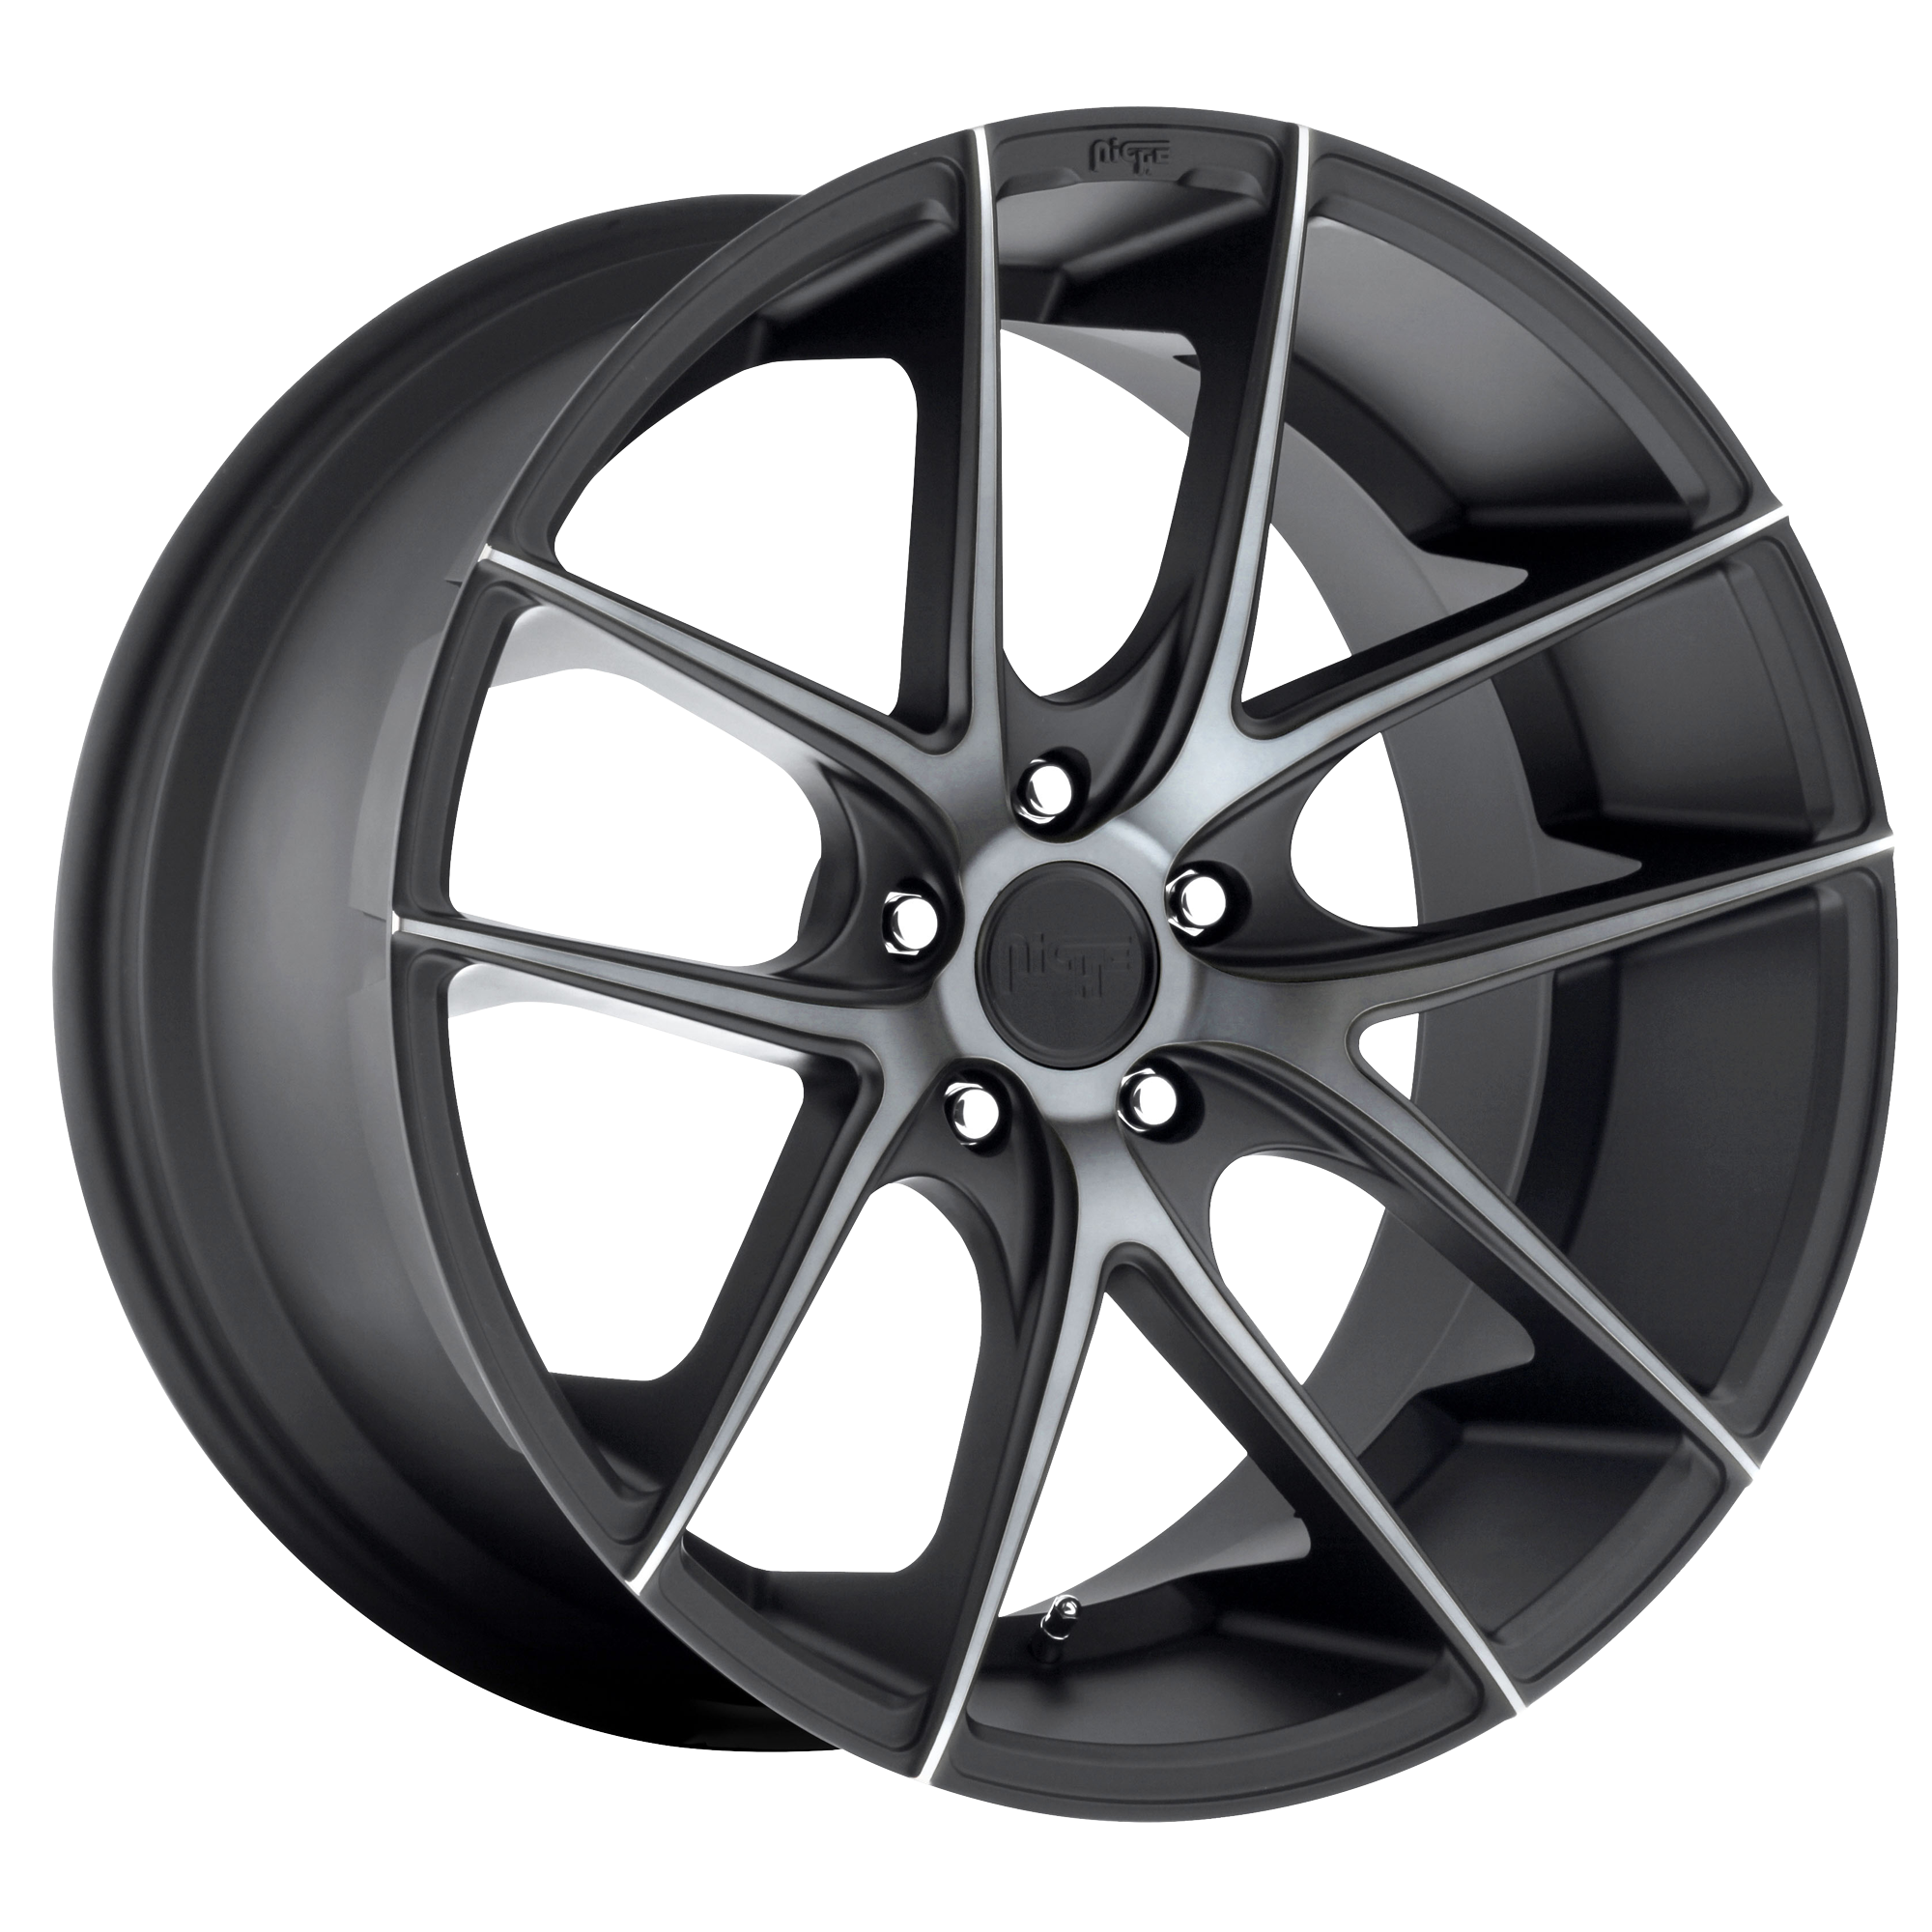 TARGA 18x8 5x108.00 MATTE BLACK DOUBLE DARK TINT (40 mm) - Tires and Engine Performance